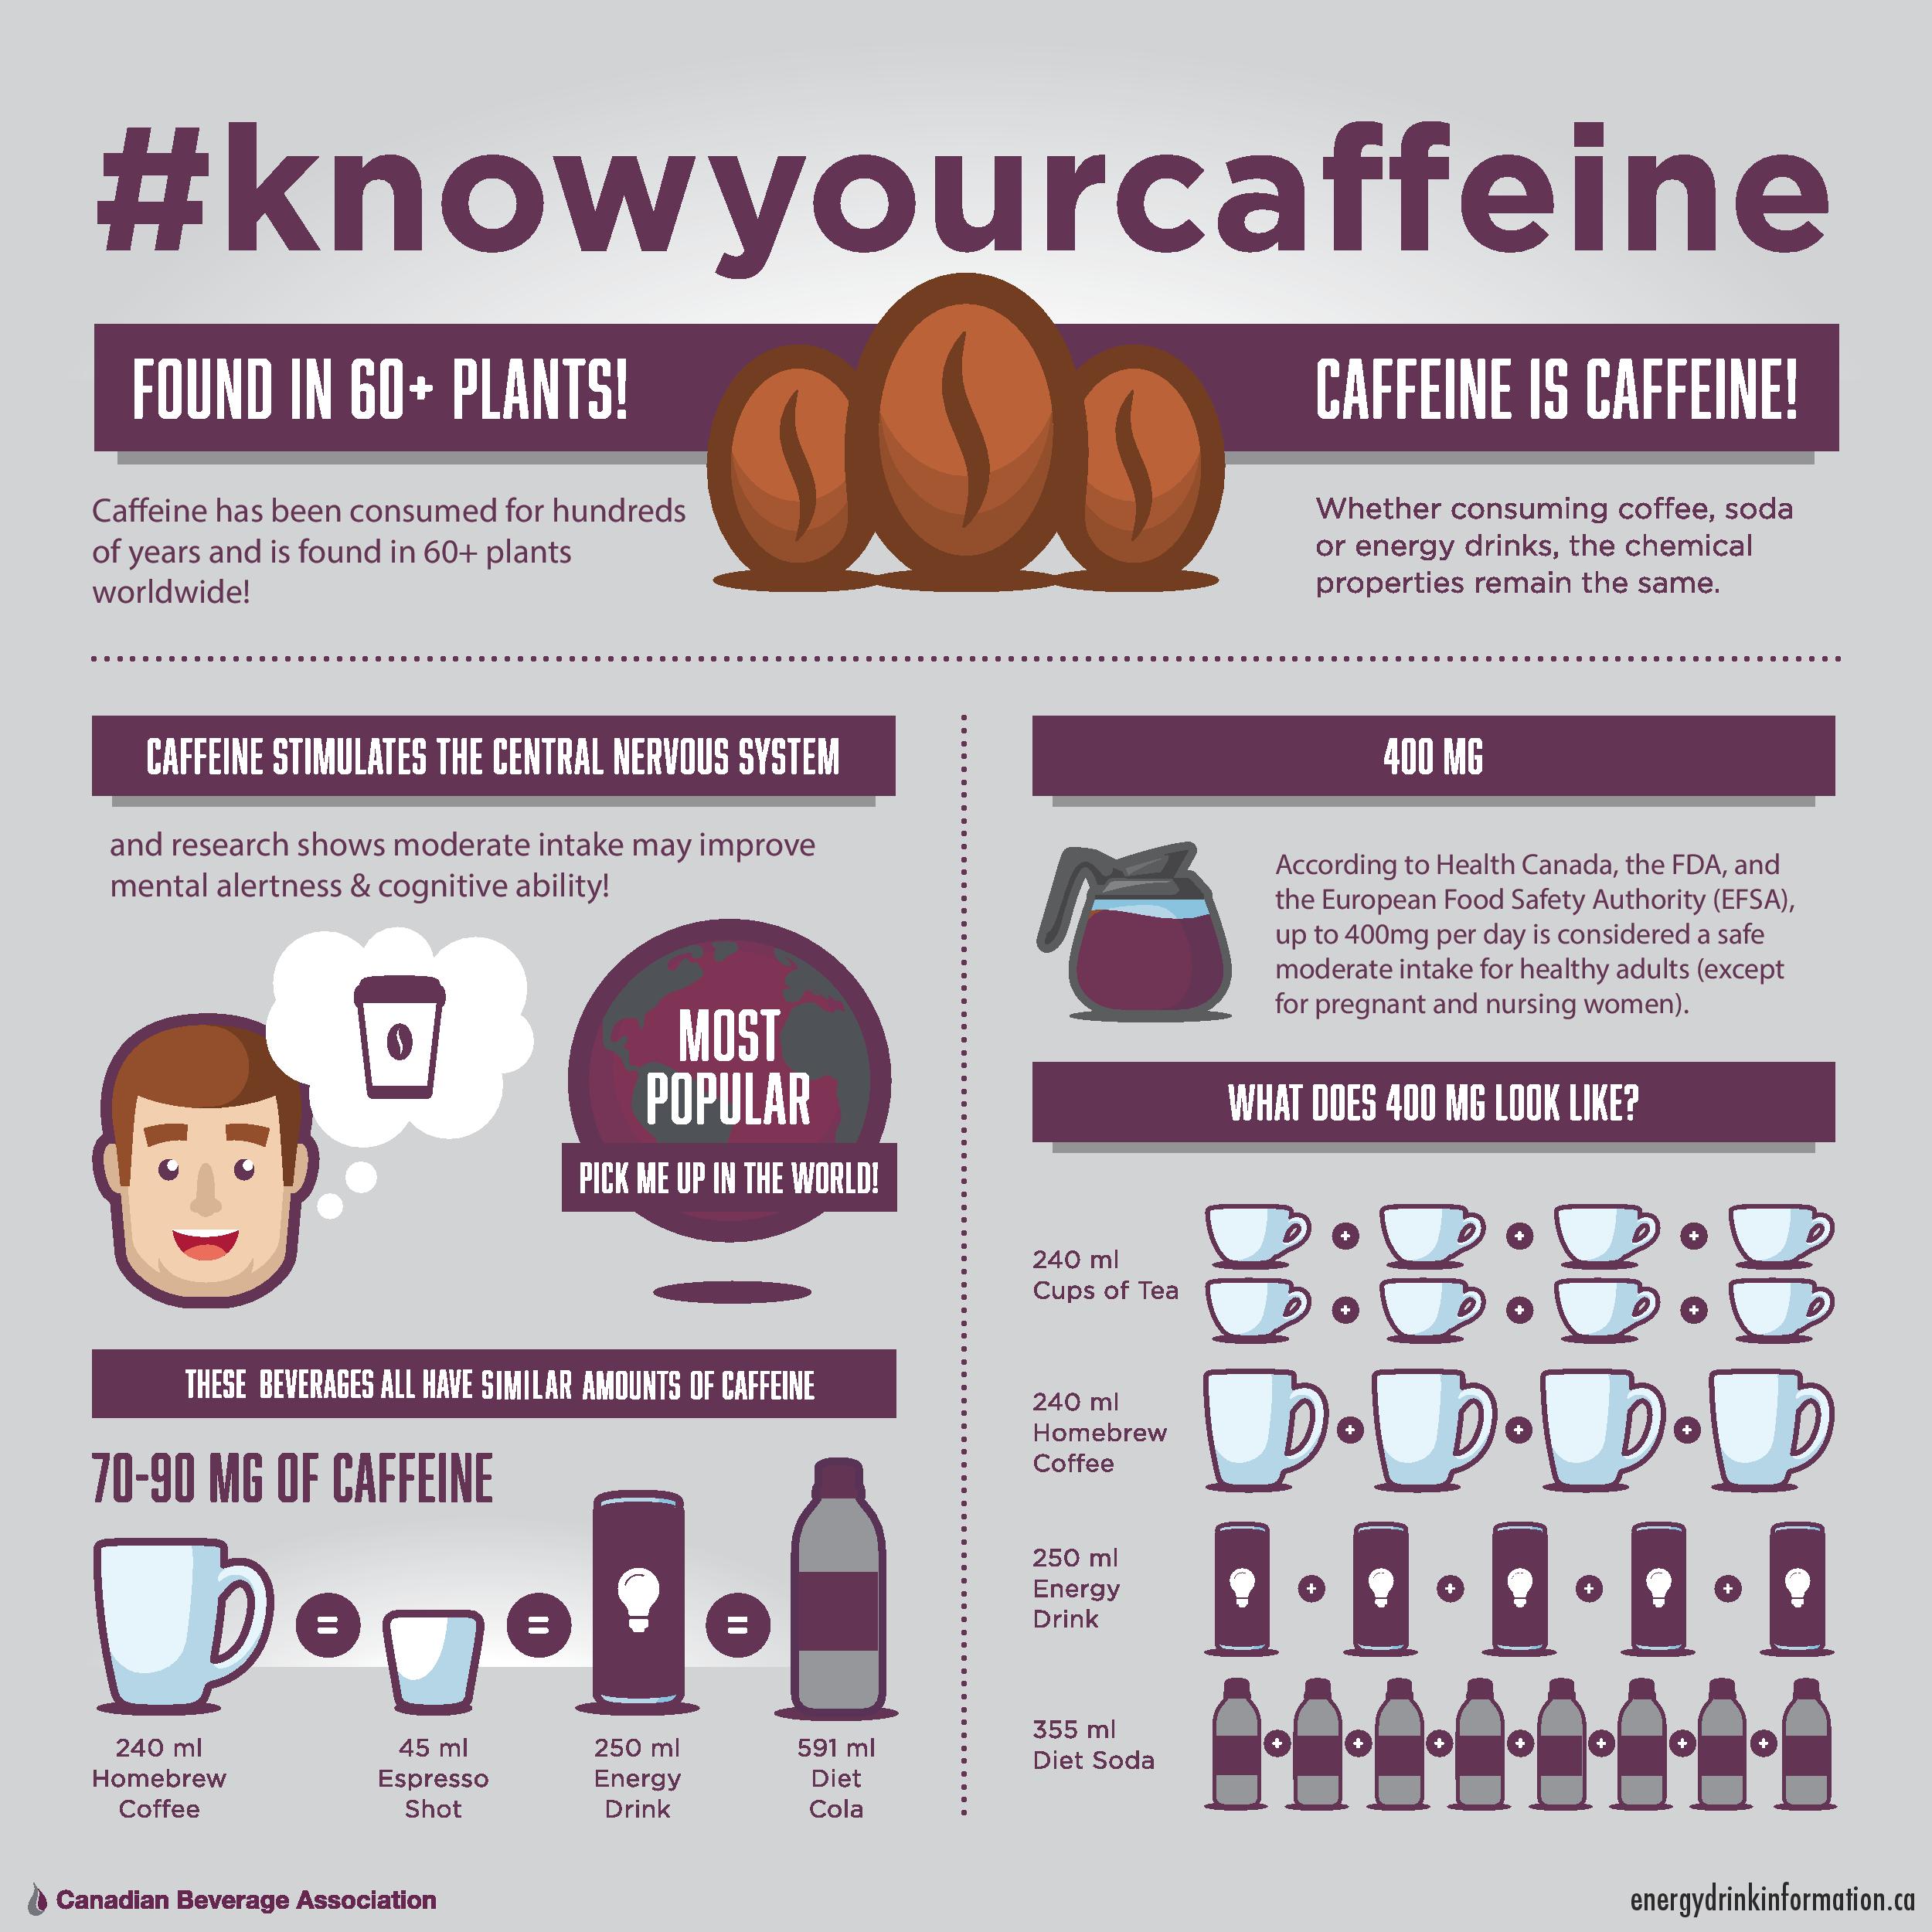 Effects of caffeine